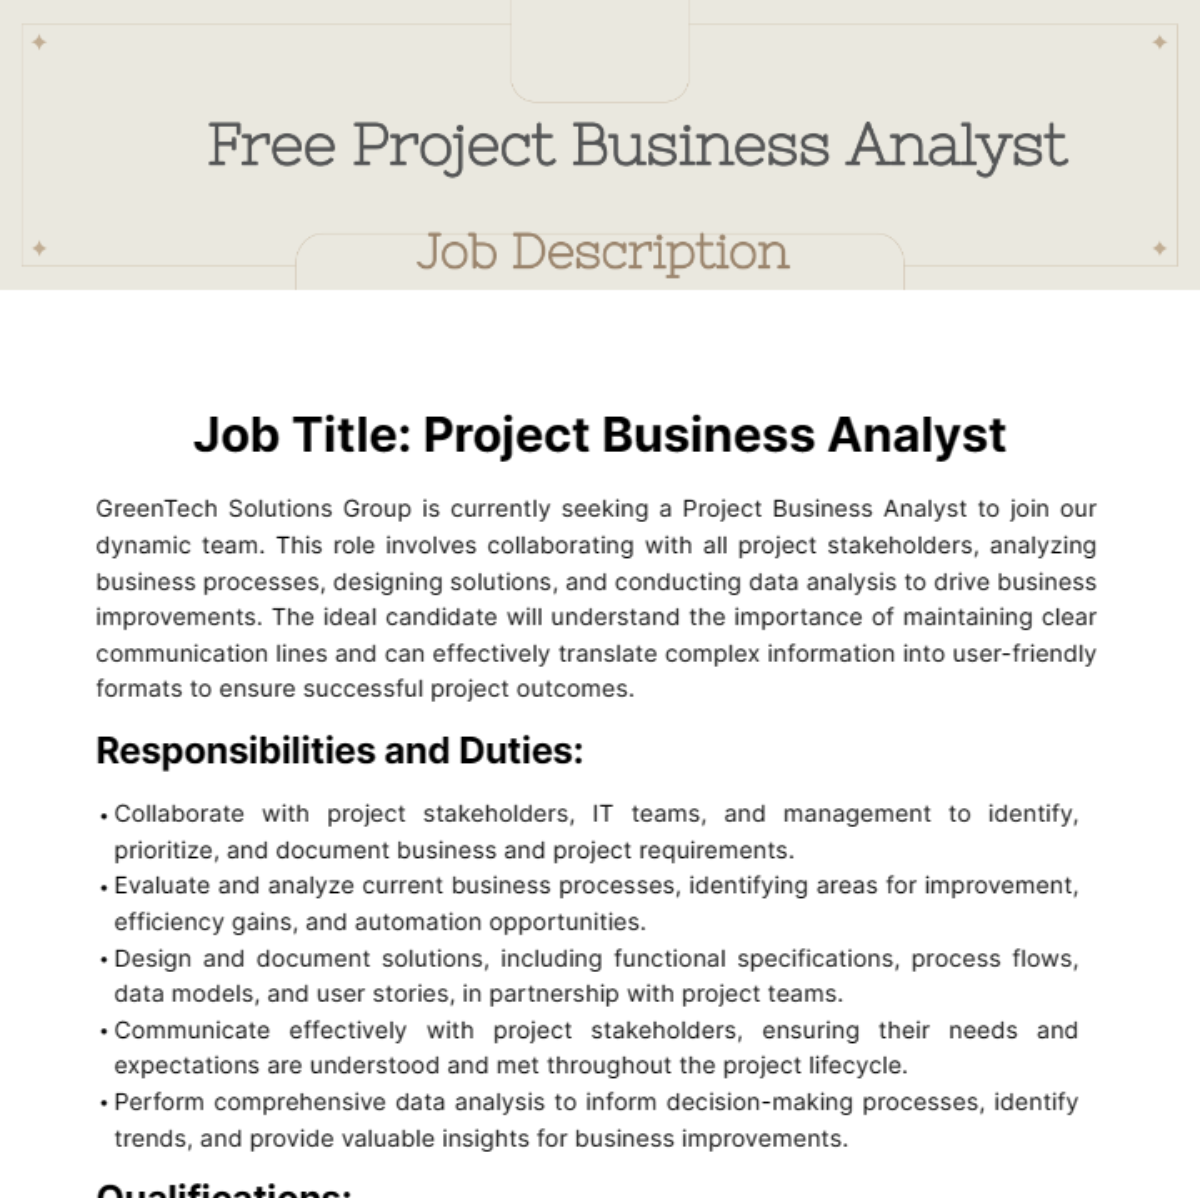 Free Project Business Analyst Job Description Template